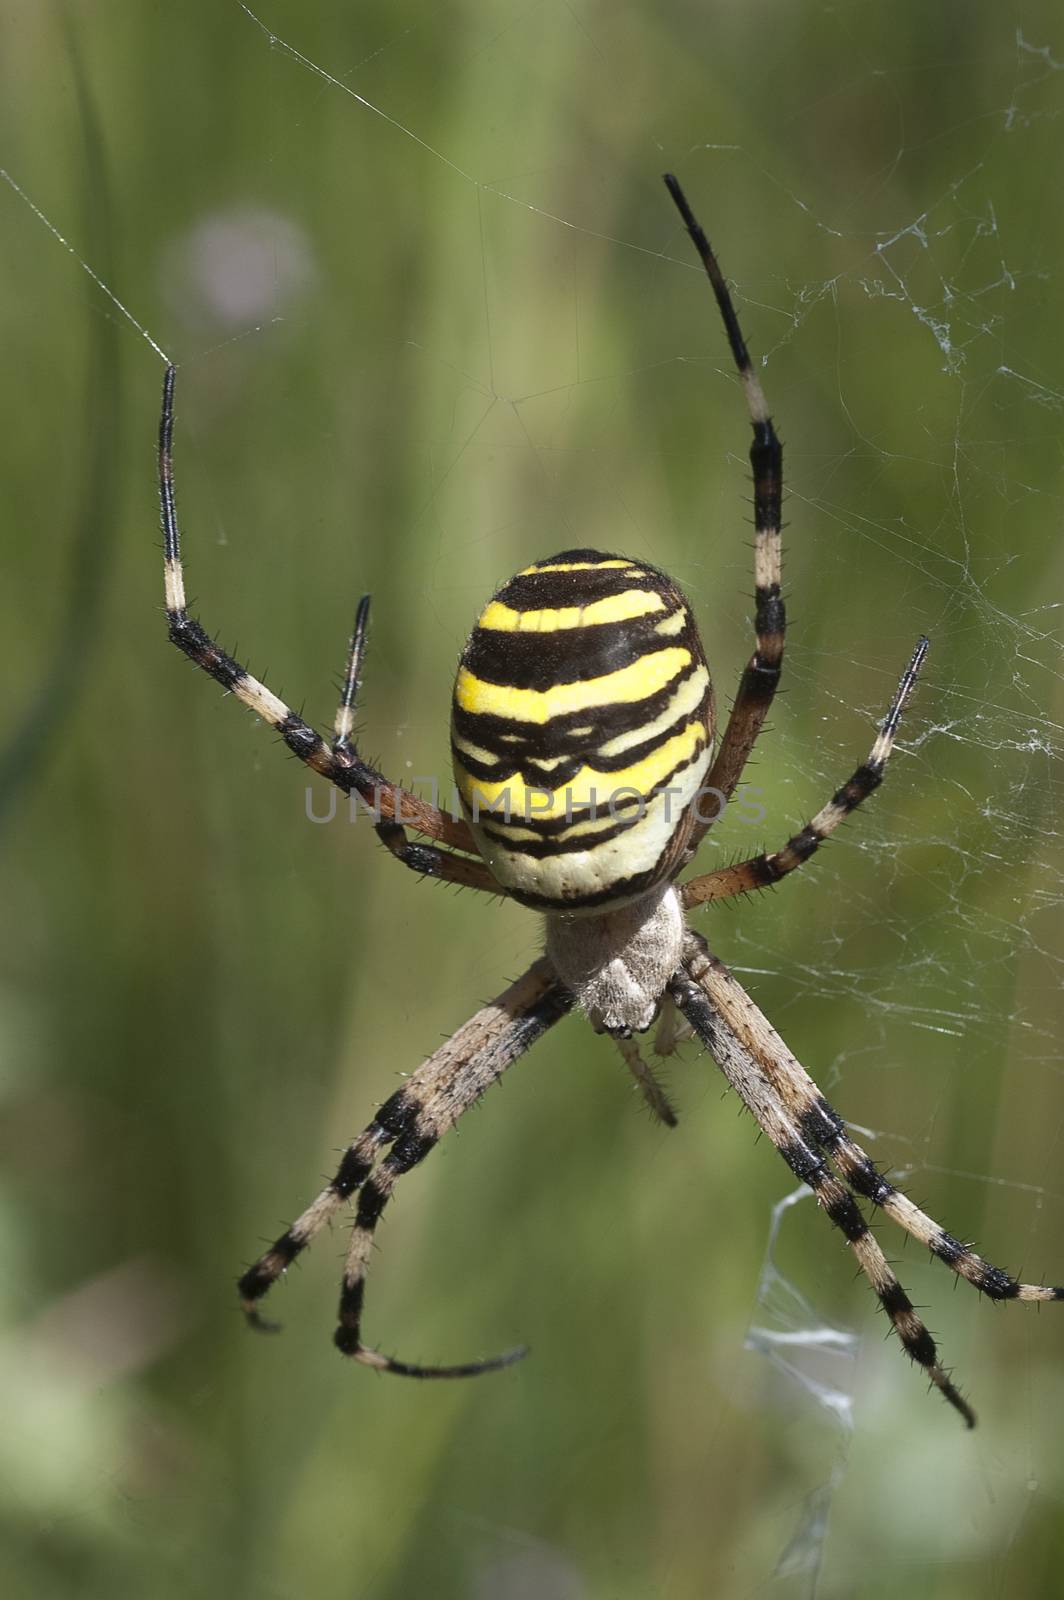 Tiger spider (Scytodes globula), hanging on its spider web by jalonsohu@gmail.com